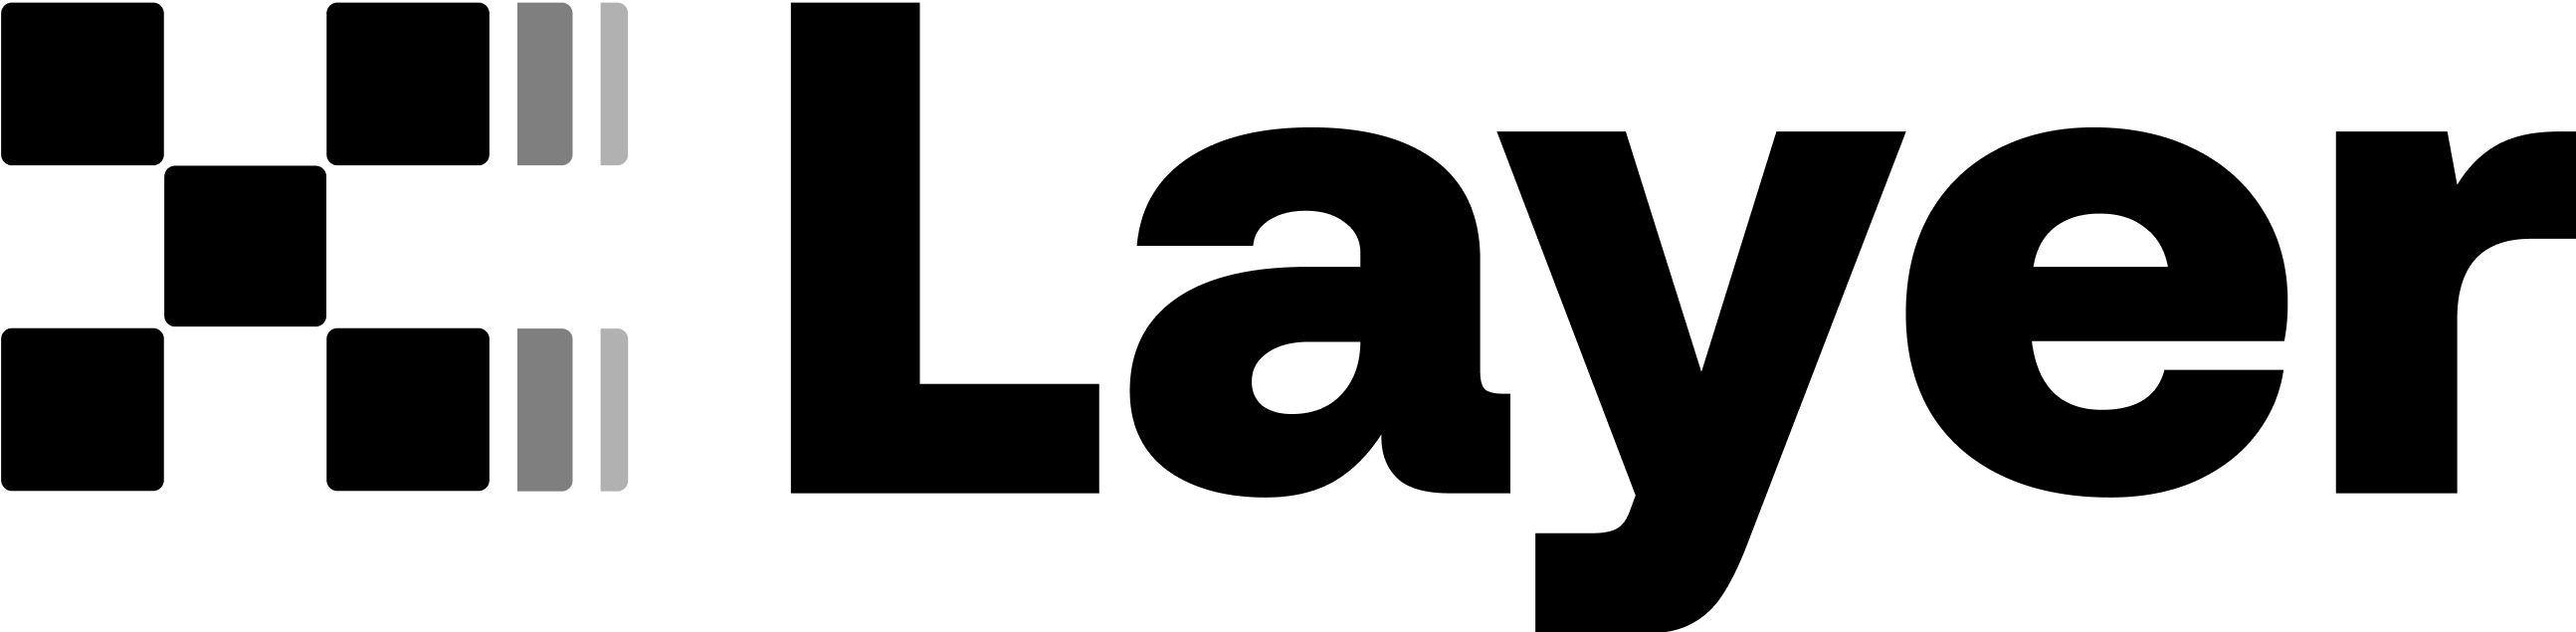 XLayer_Logo_Black.png